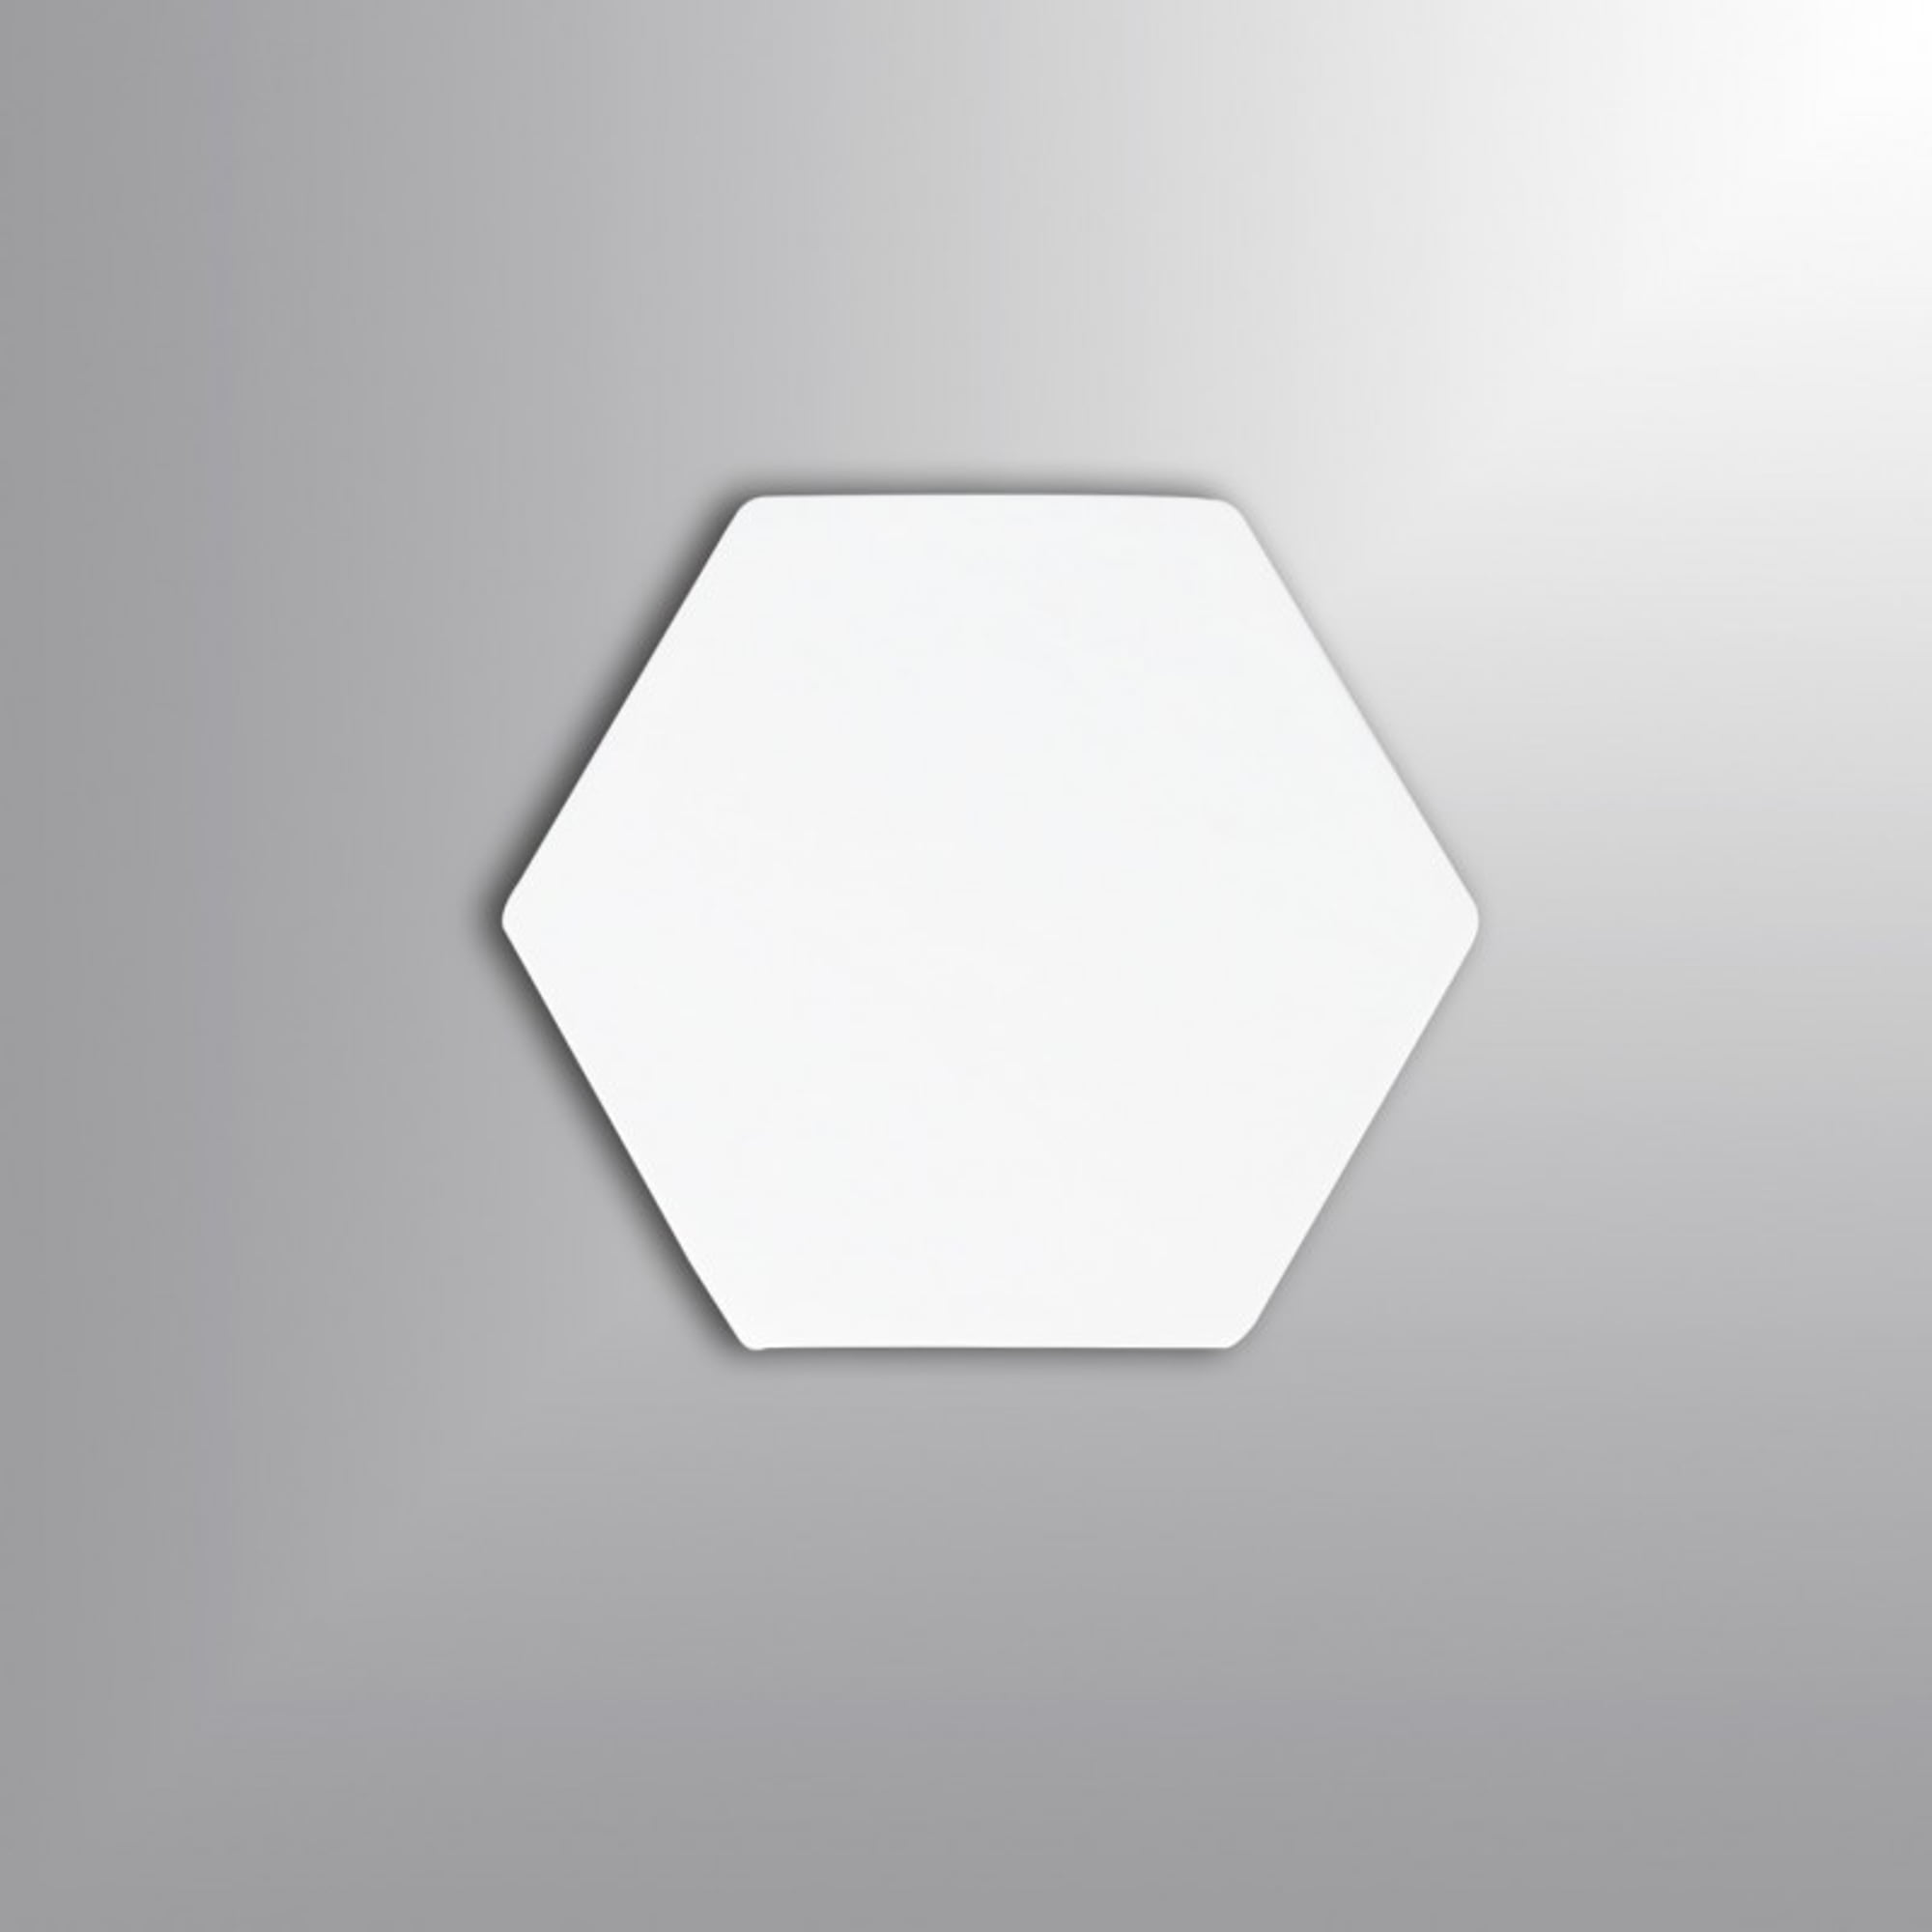 Tile Branco Hexagonal 40x45mm - Pacote com 20